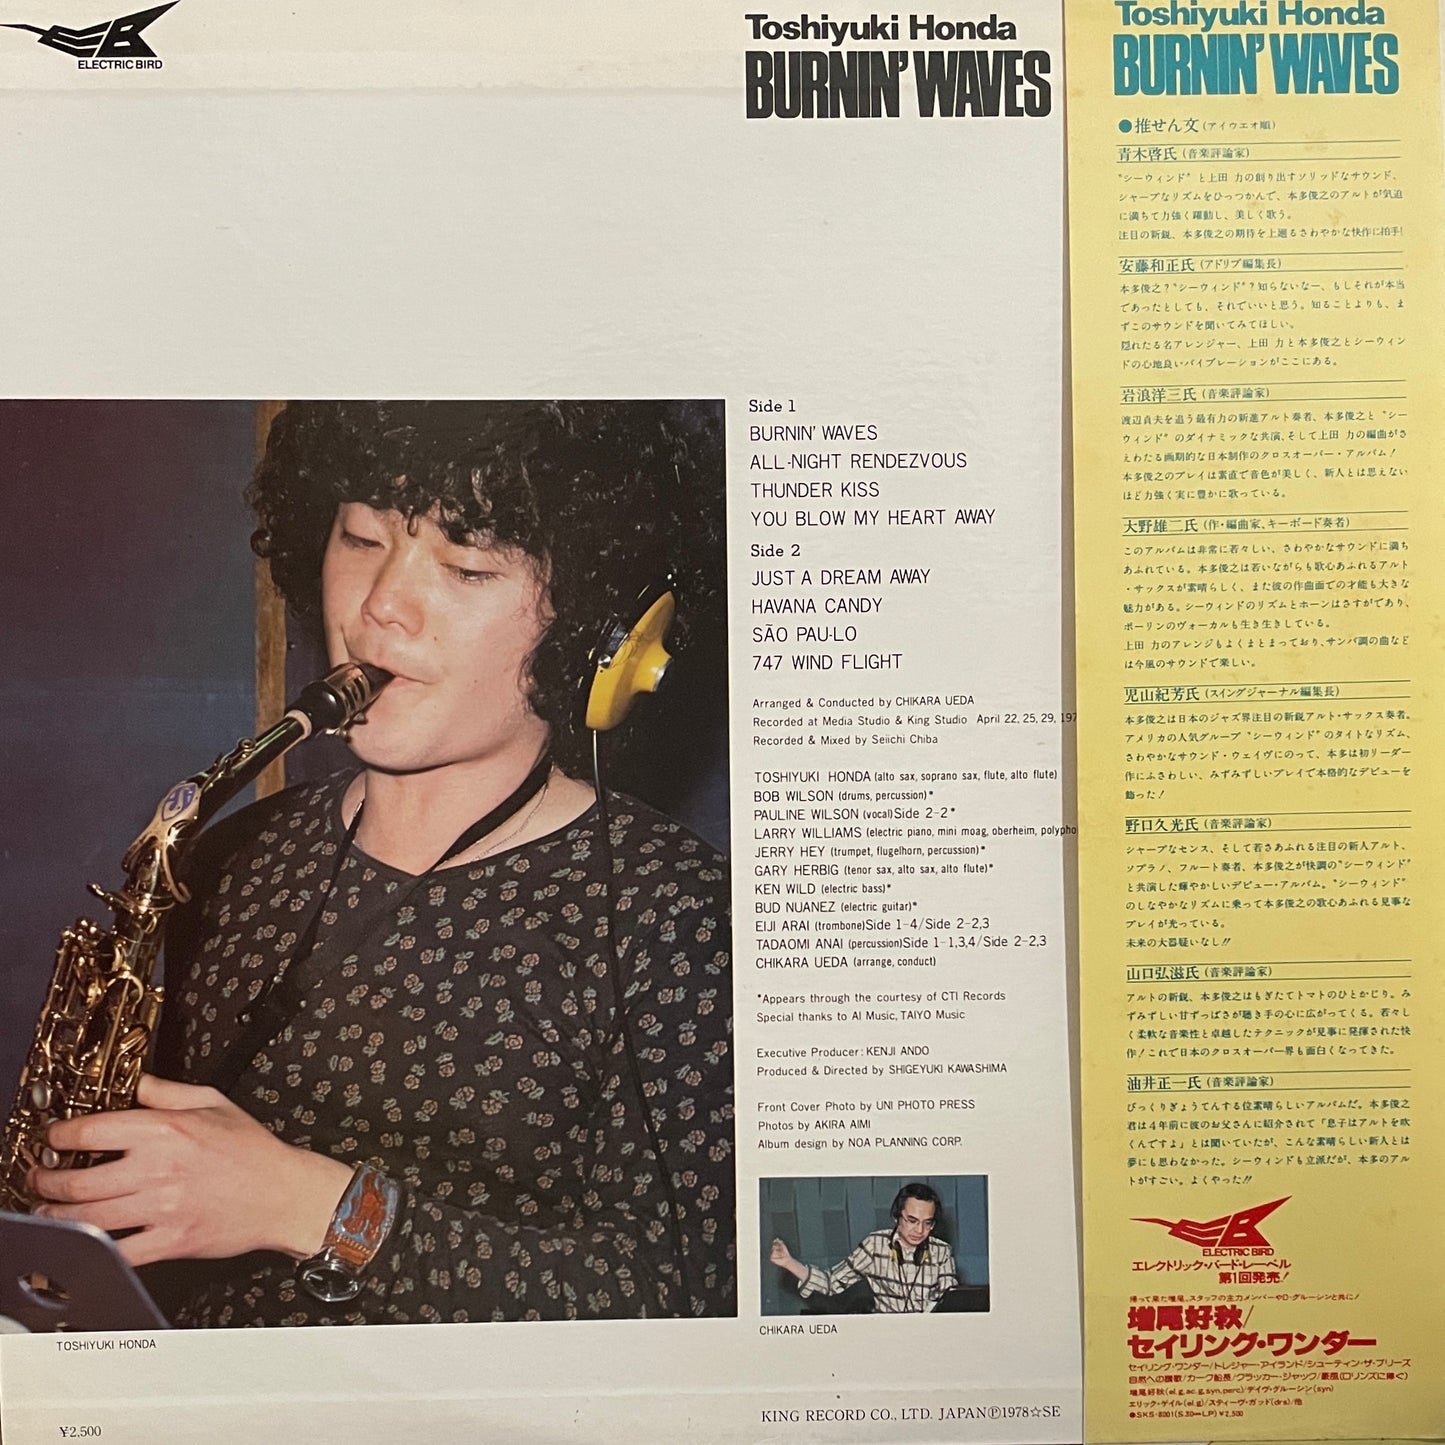 Toshiyuki Honda "Burnin Waves" (1978)